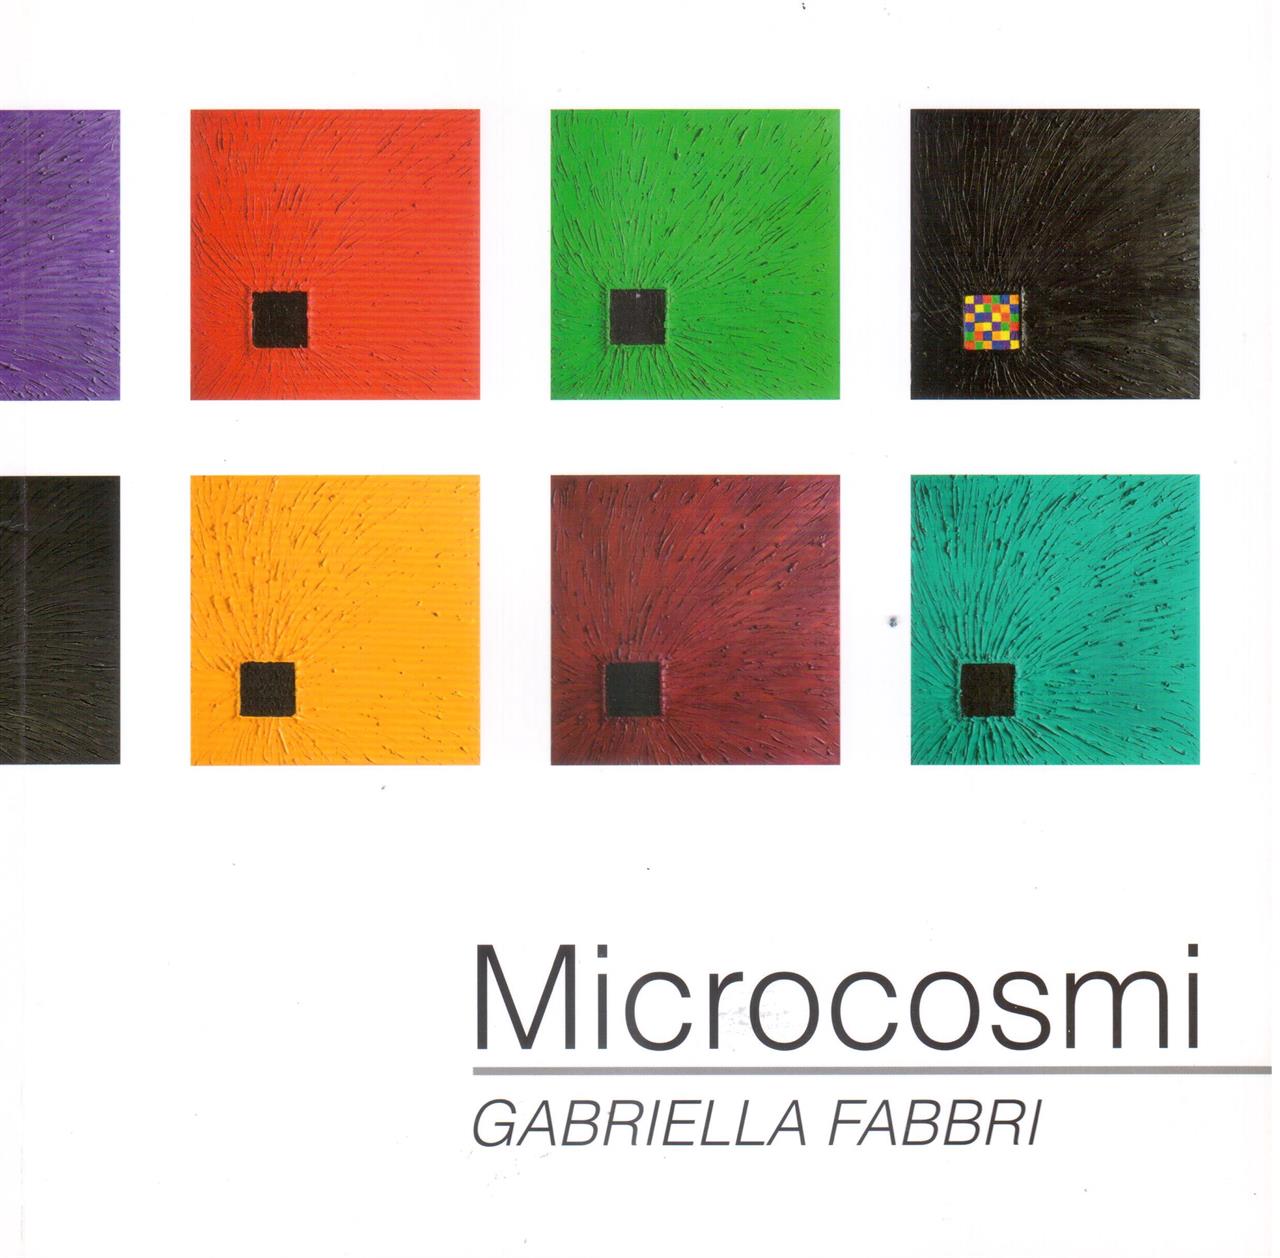 Microcosmi. Gabriella Fabbri